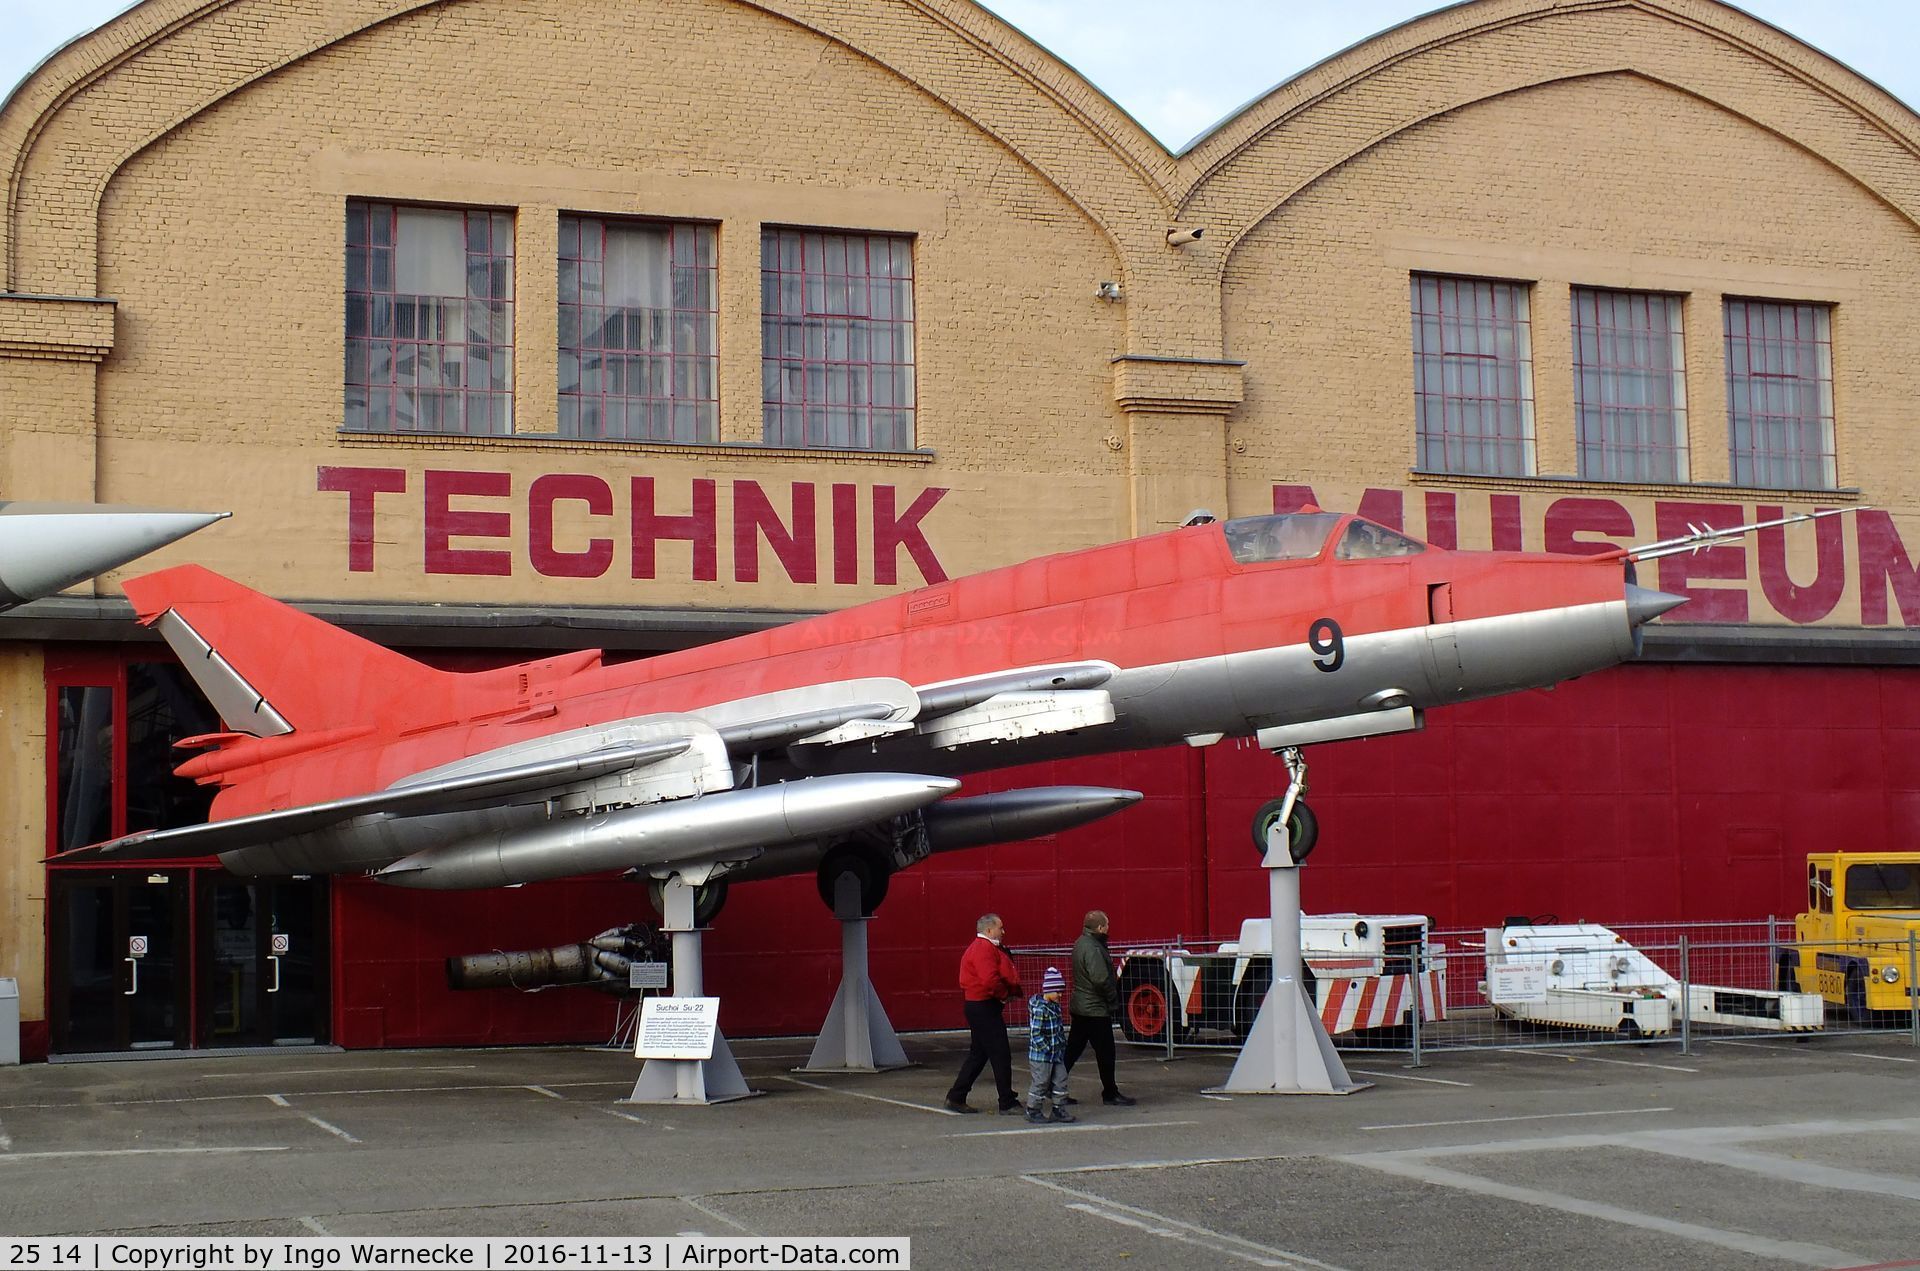 25 14, Sukhoi Su-22M-4 C/N 26001, Sukhoi Su-22M-4 FITTER-K at the Technik-Museum, Speyer